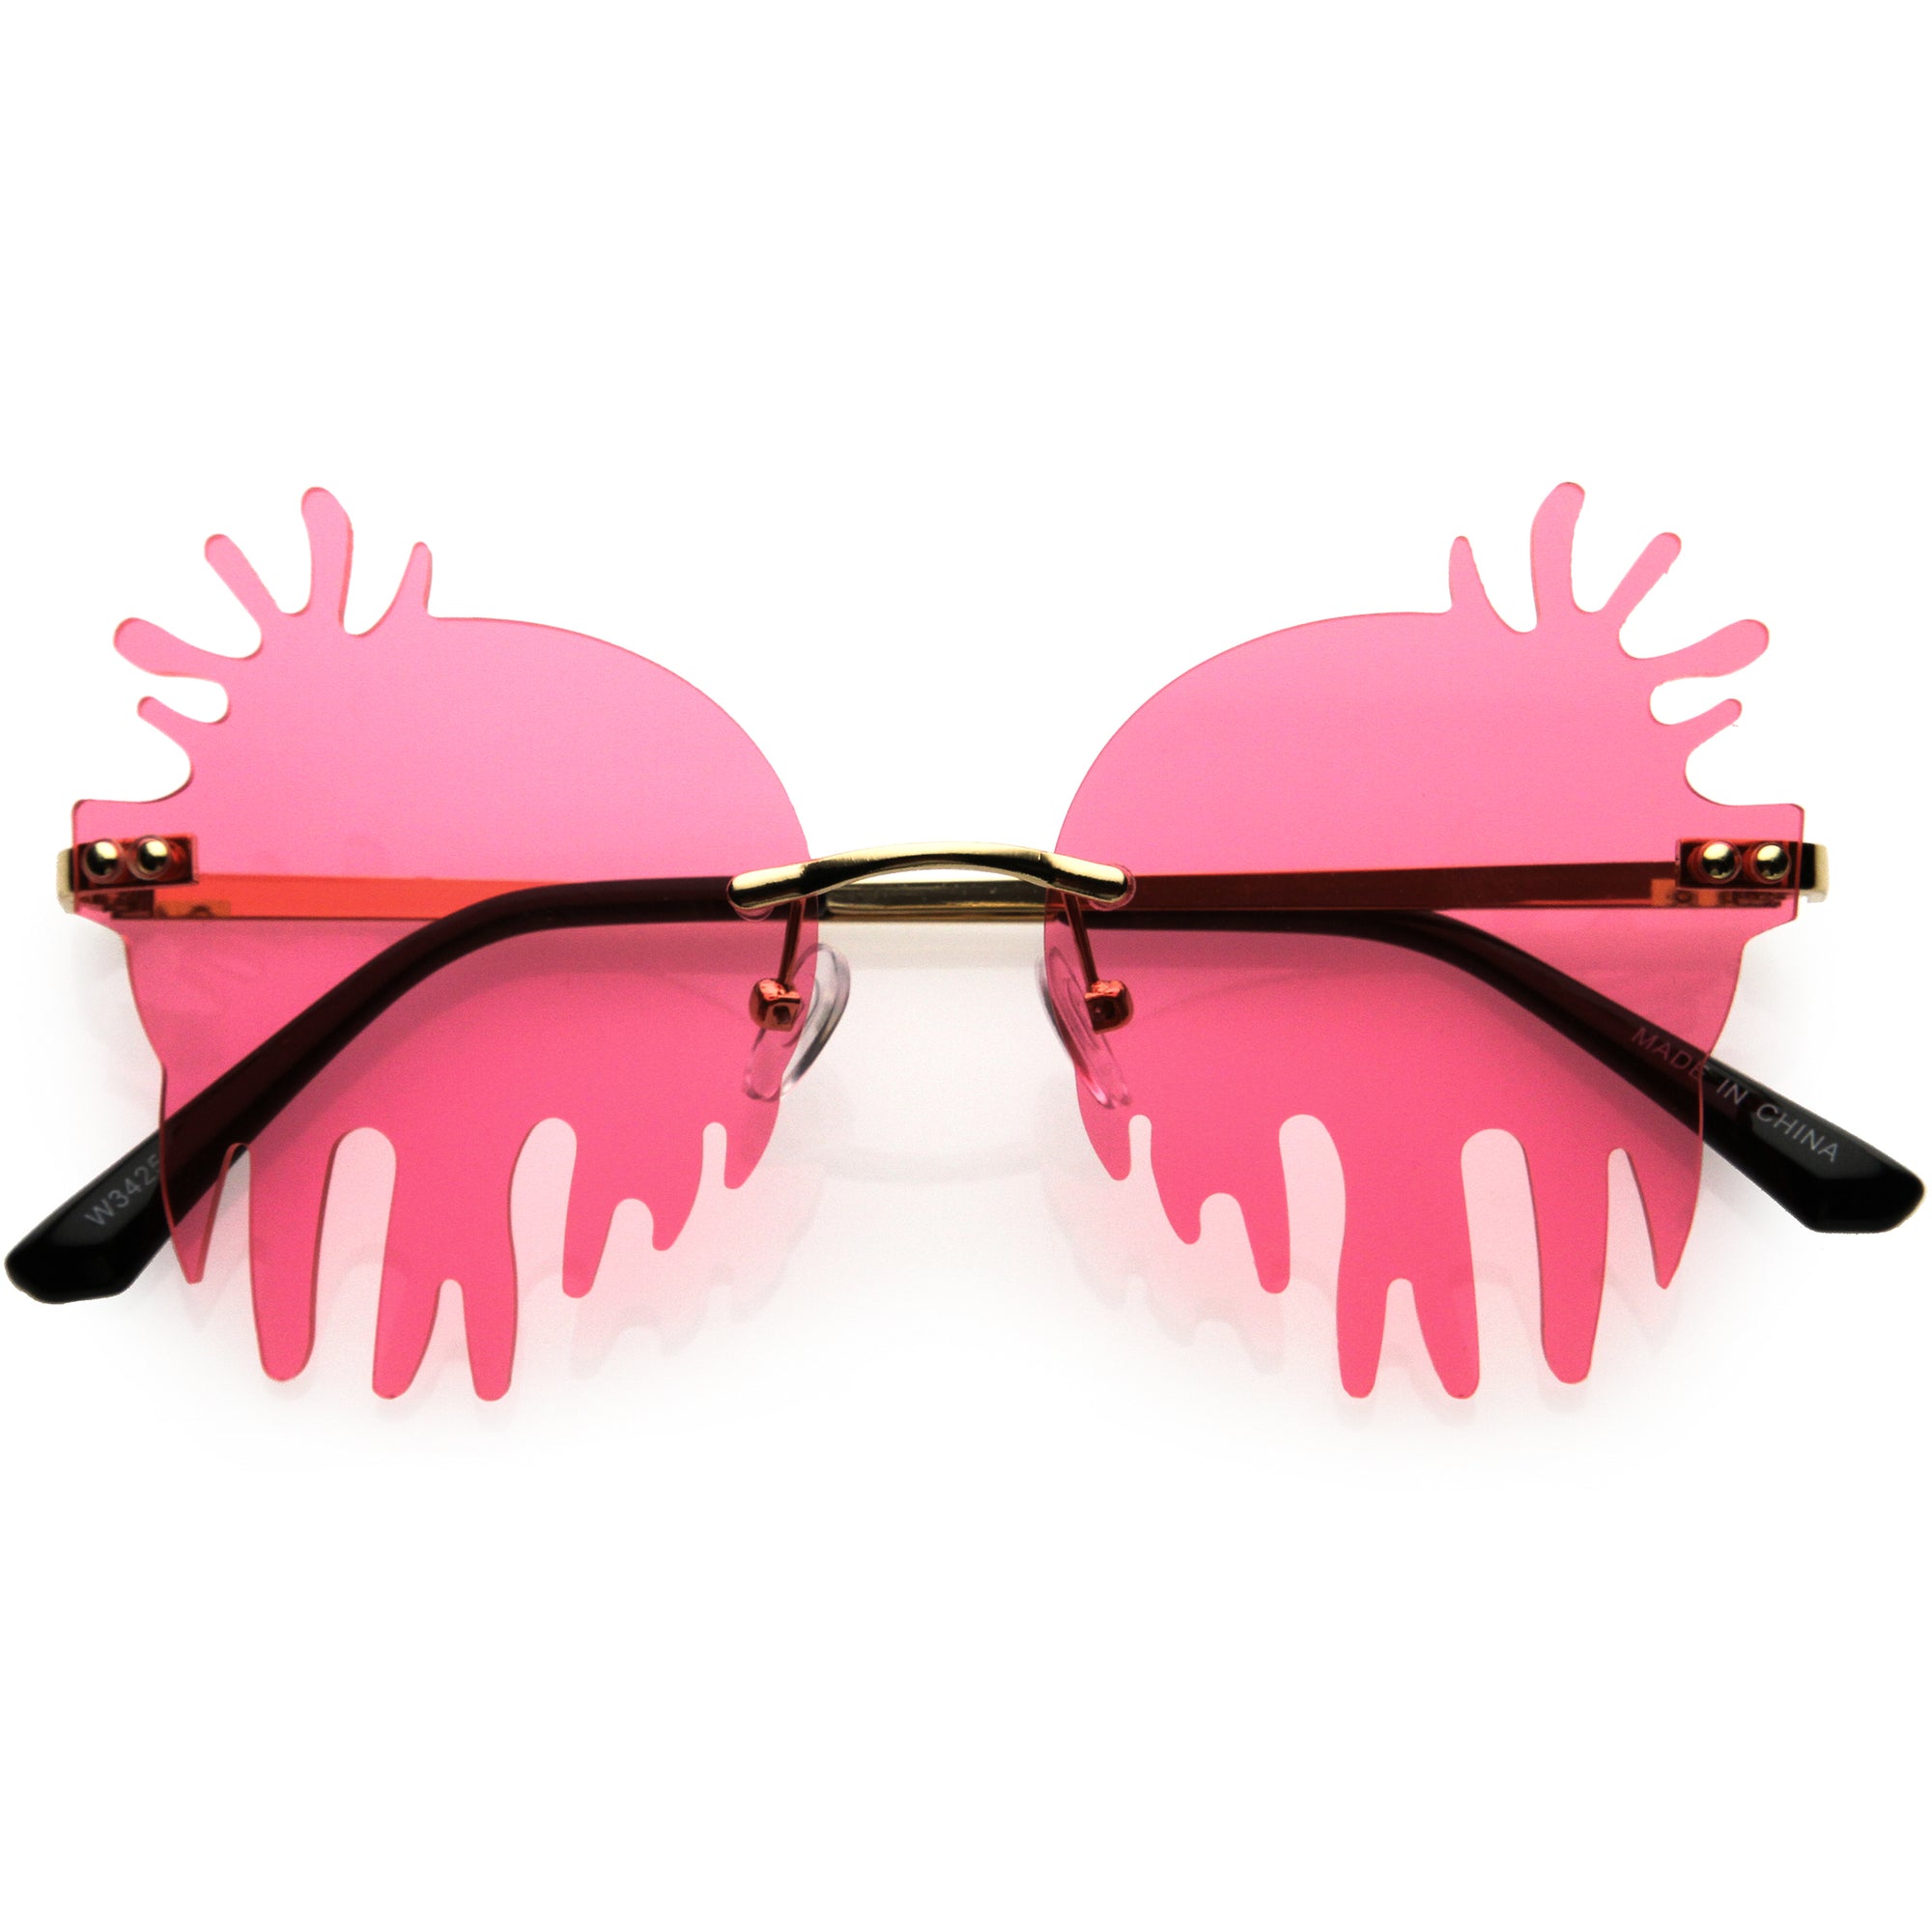 Rimless round metal sunglasses | Fendi Eyewear